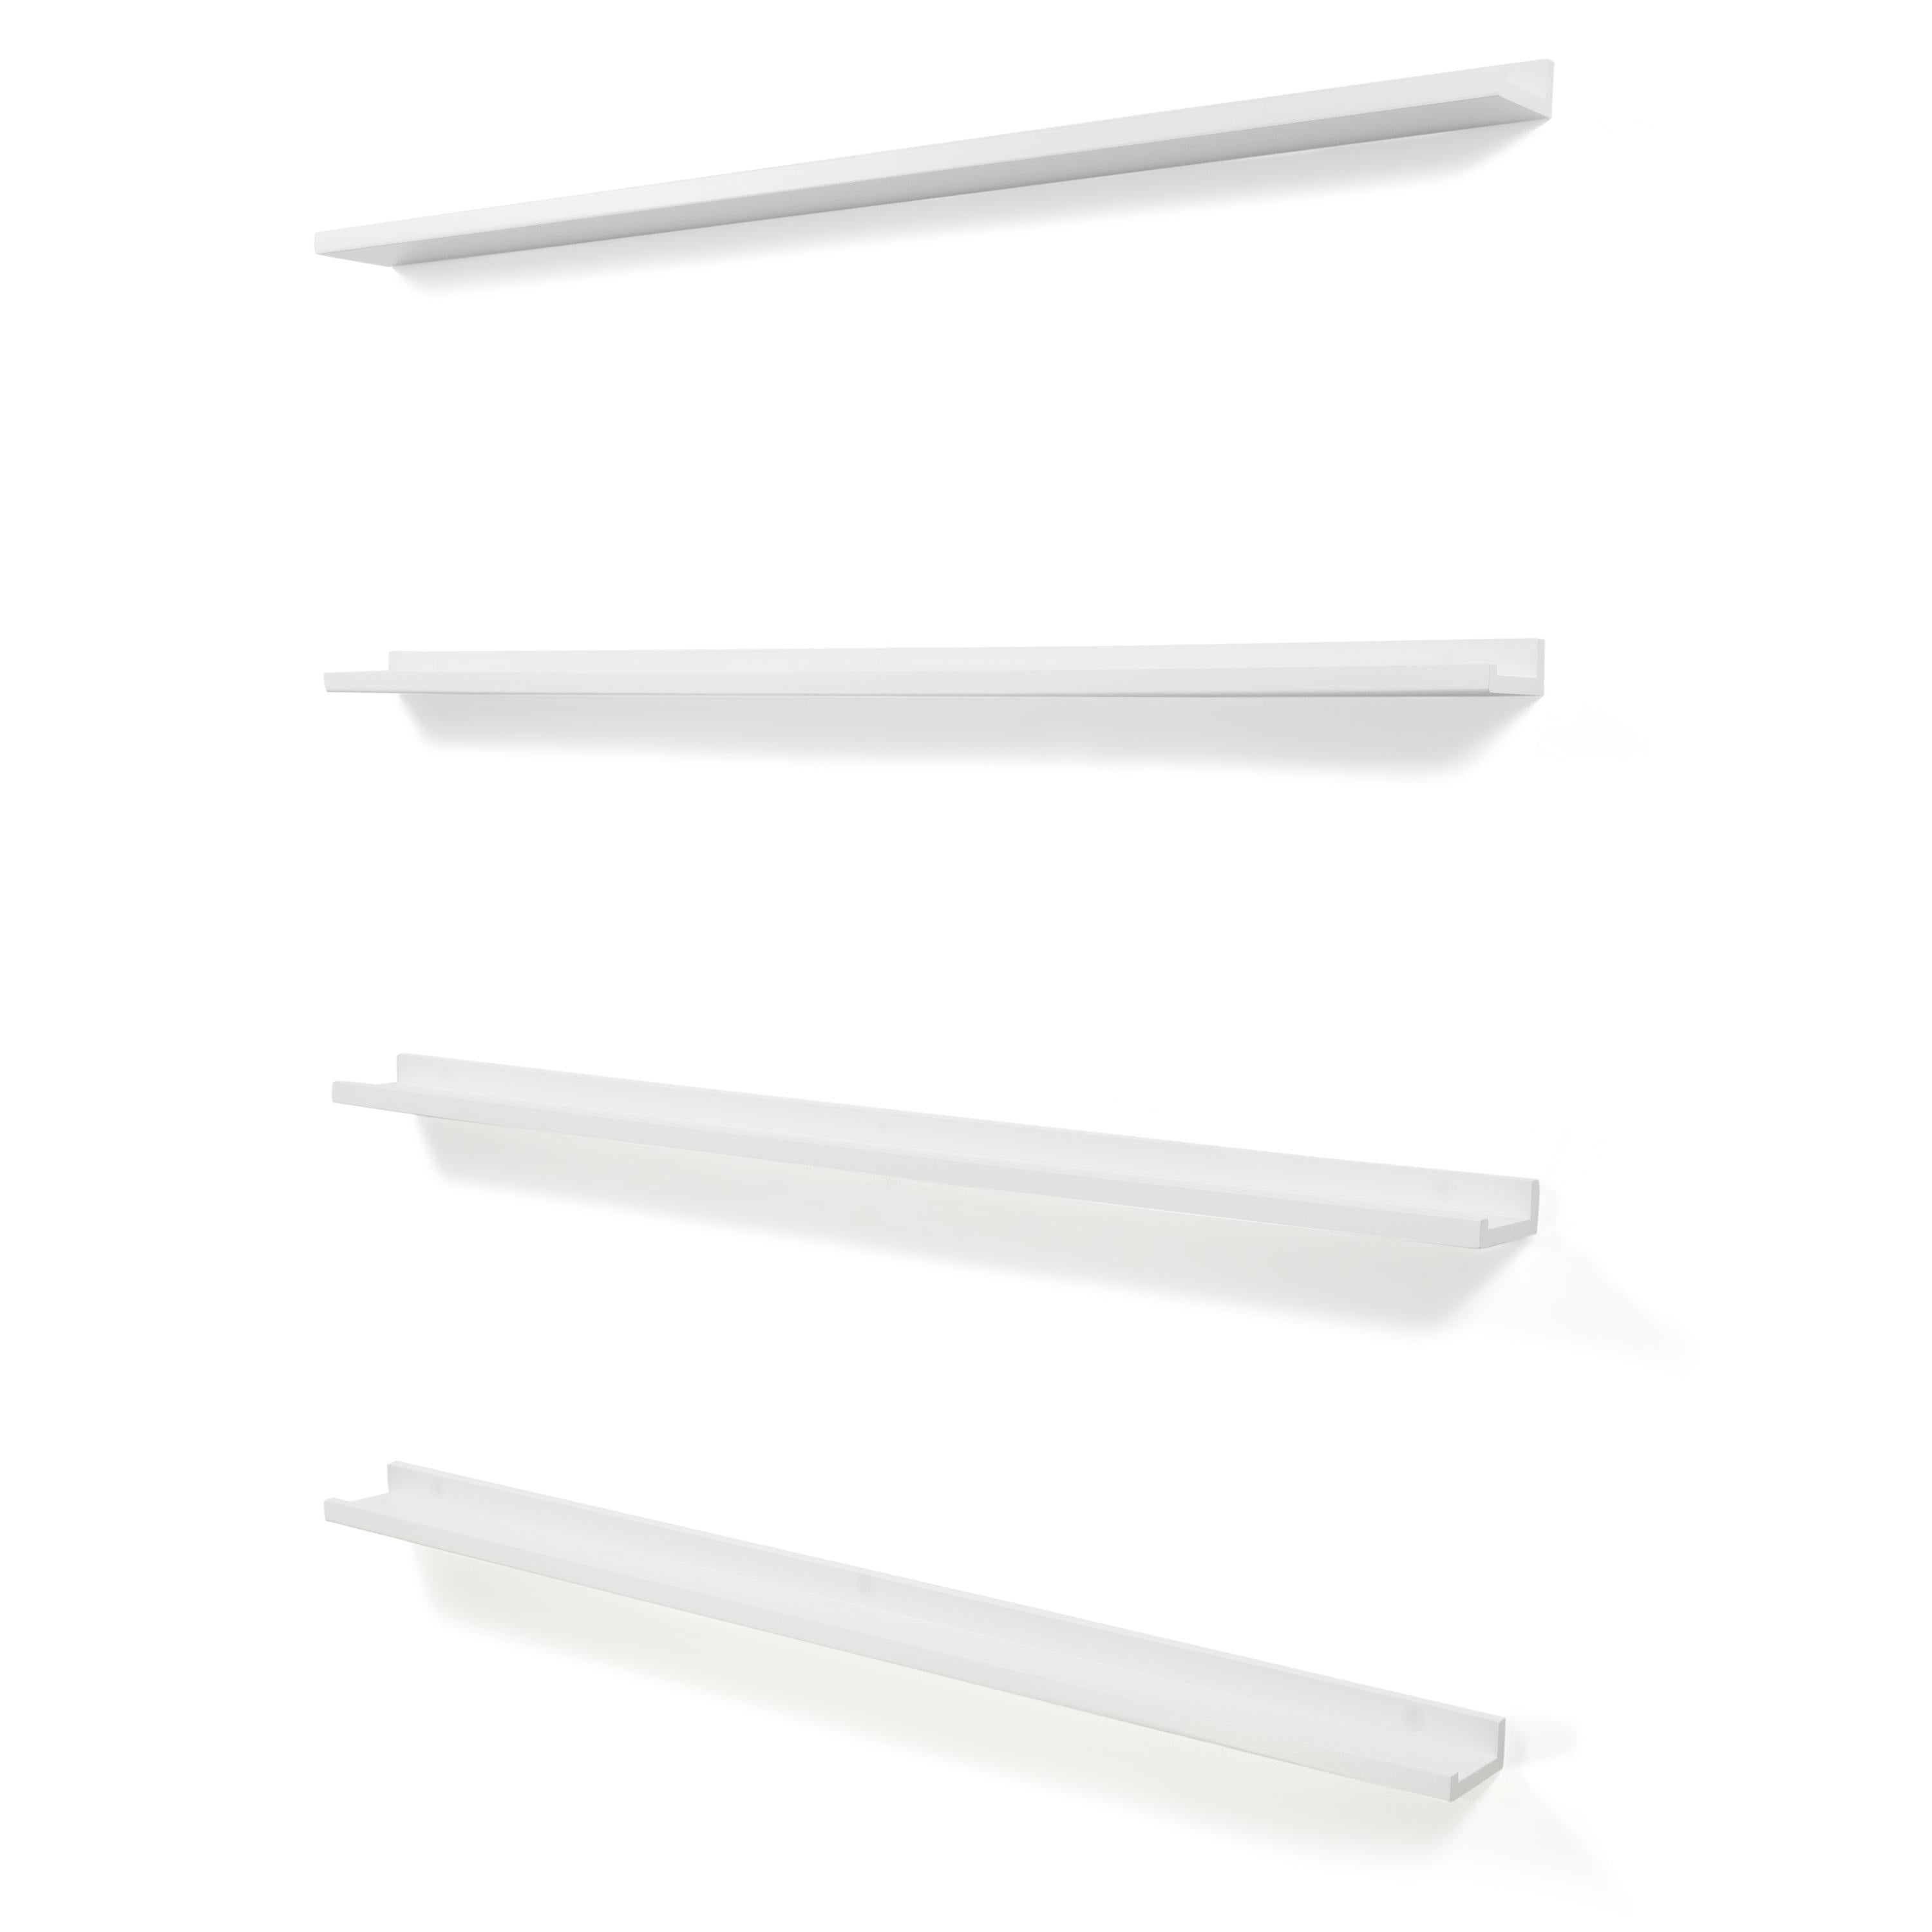 DENVER Picture Ledge Floating Shelves and Wall Bookshelf for Bedroom Decor – 46" Length x 3.6" Depth – Set of 4 - White - Wallniture